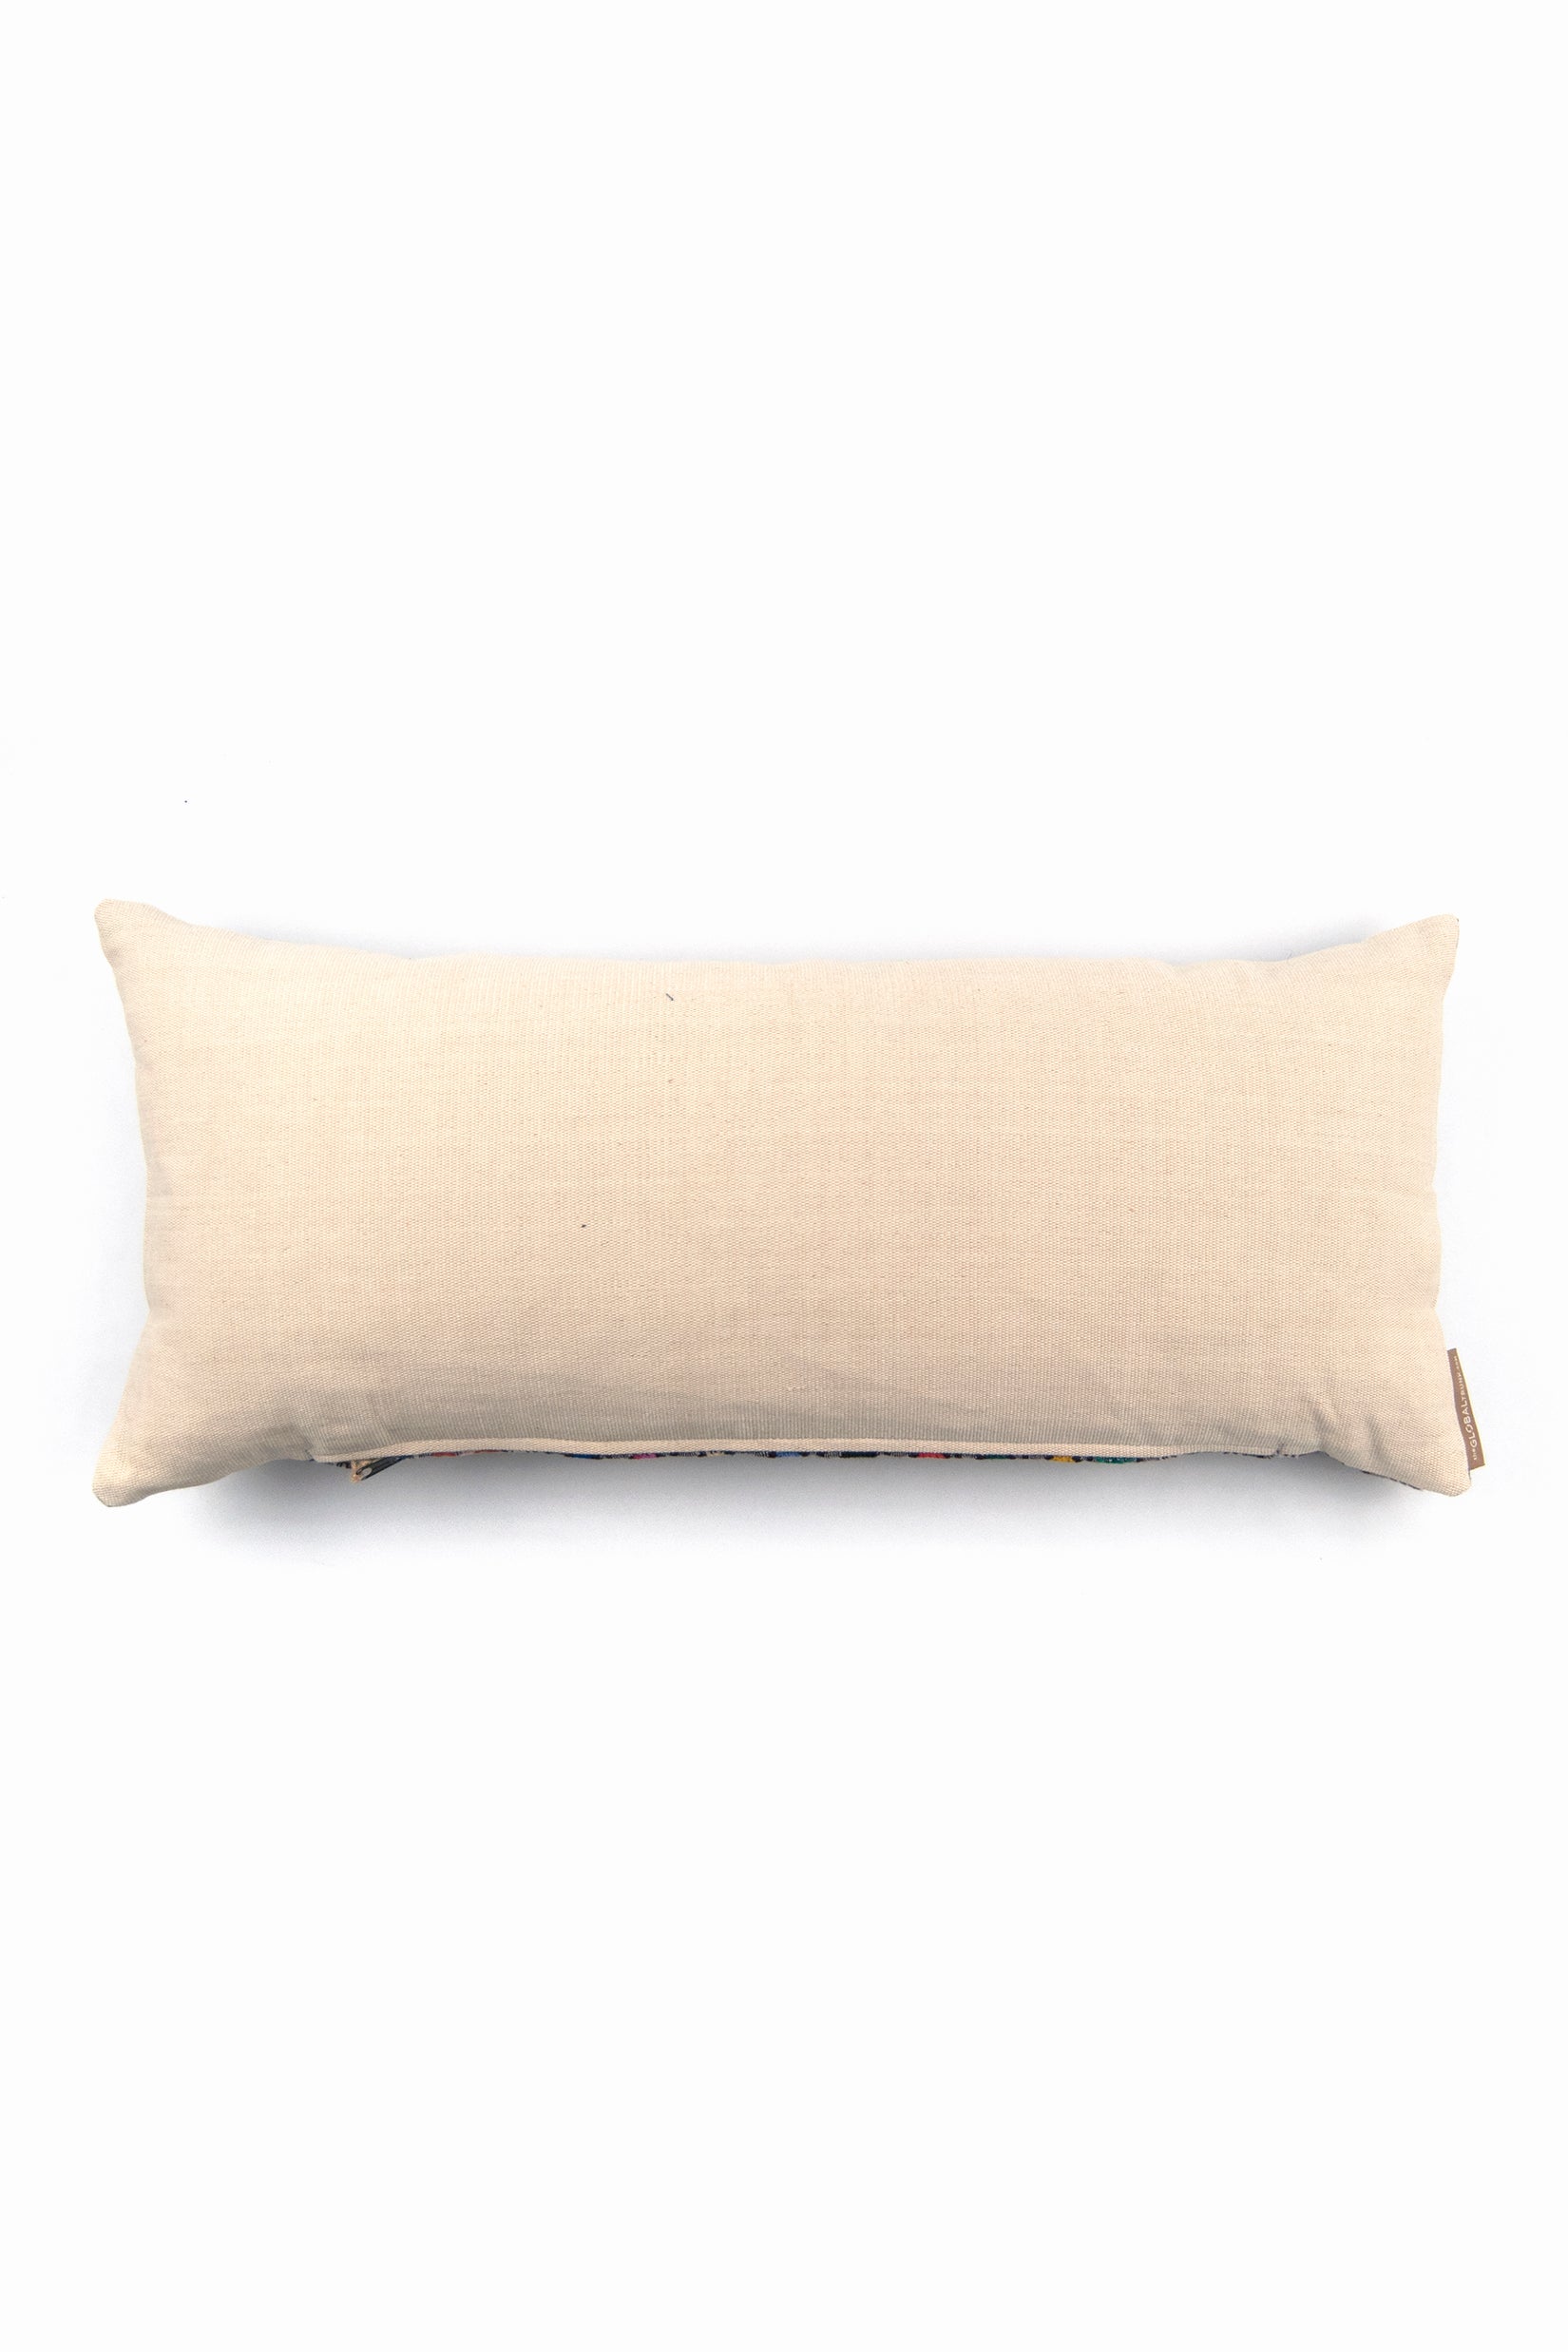 Maya Heirloom Pillow No. 1030